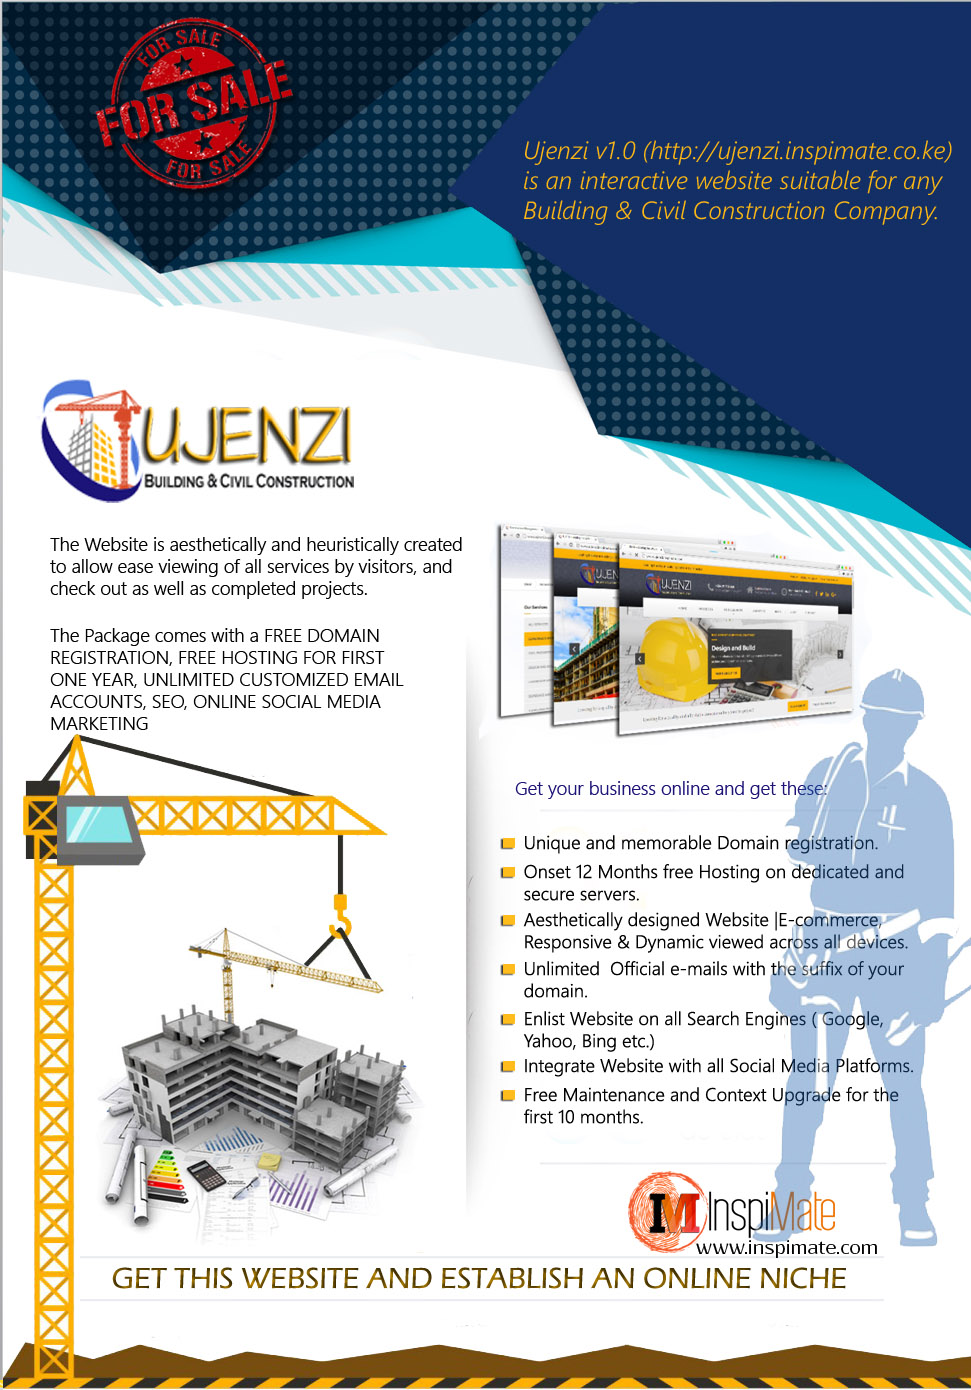 Ujenzi - Construction Company Website For Sale by Inspimate Enterprises